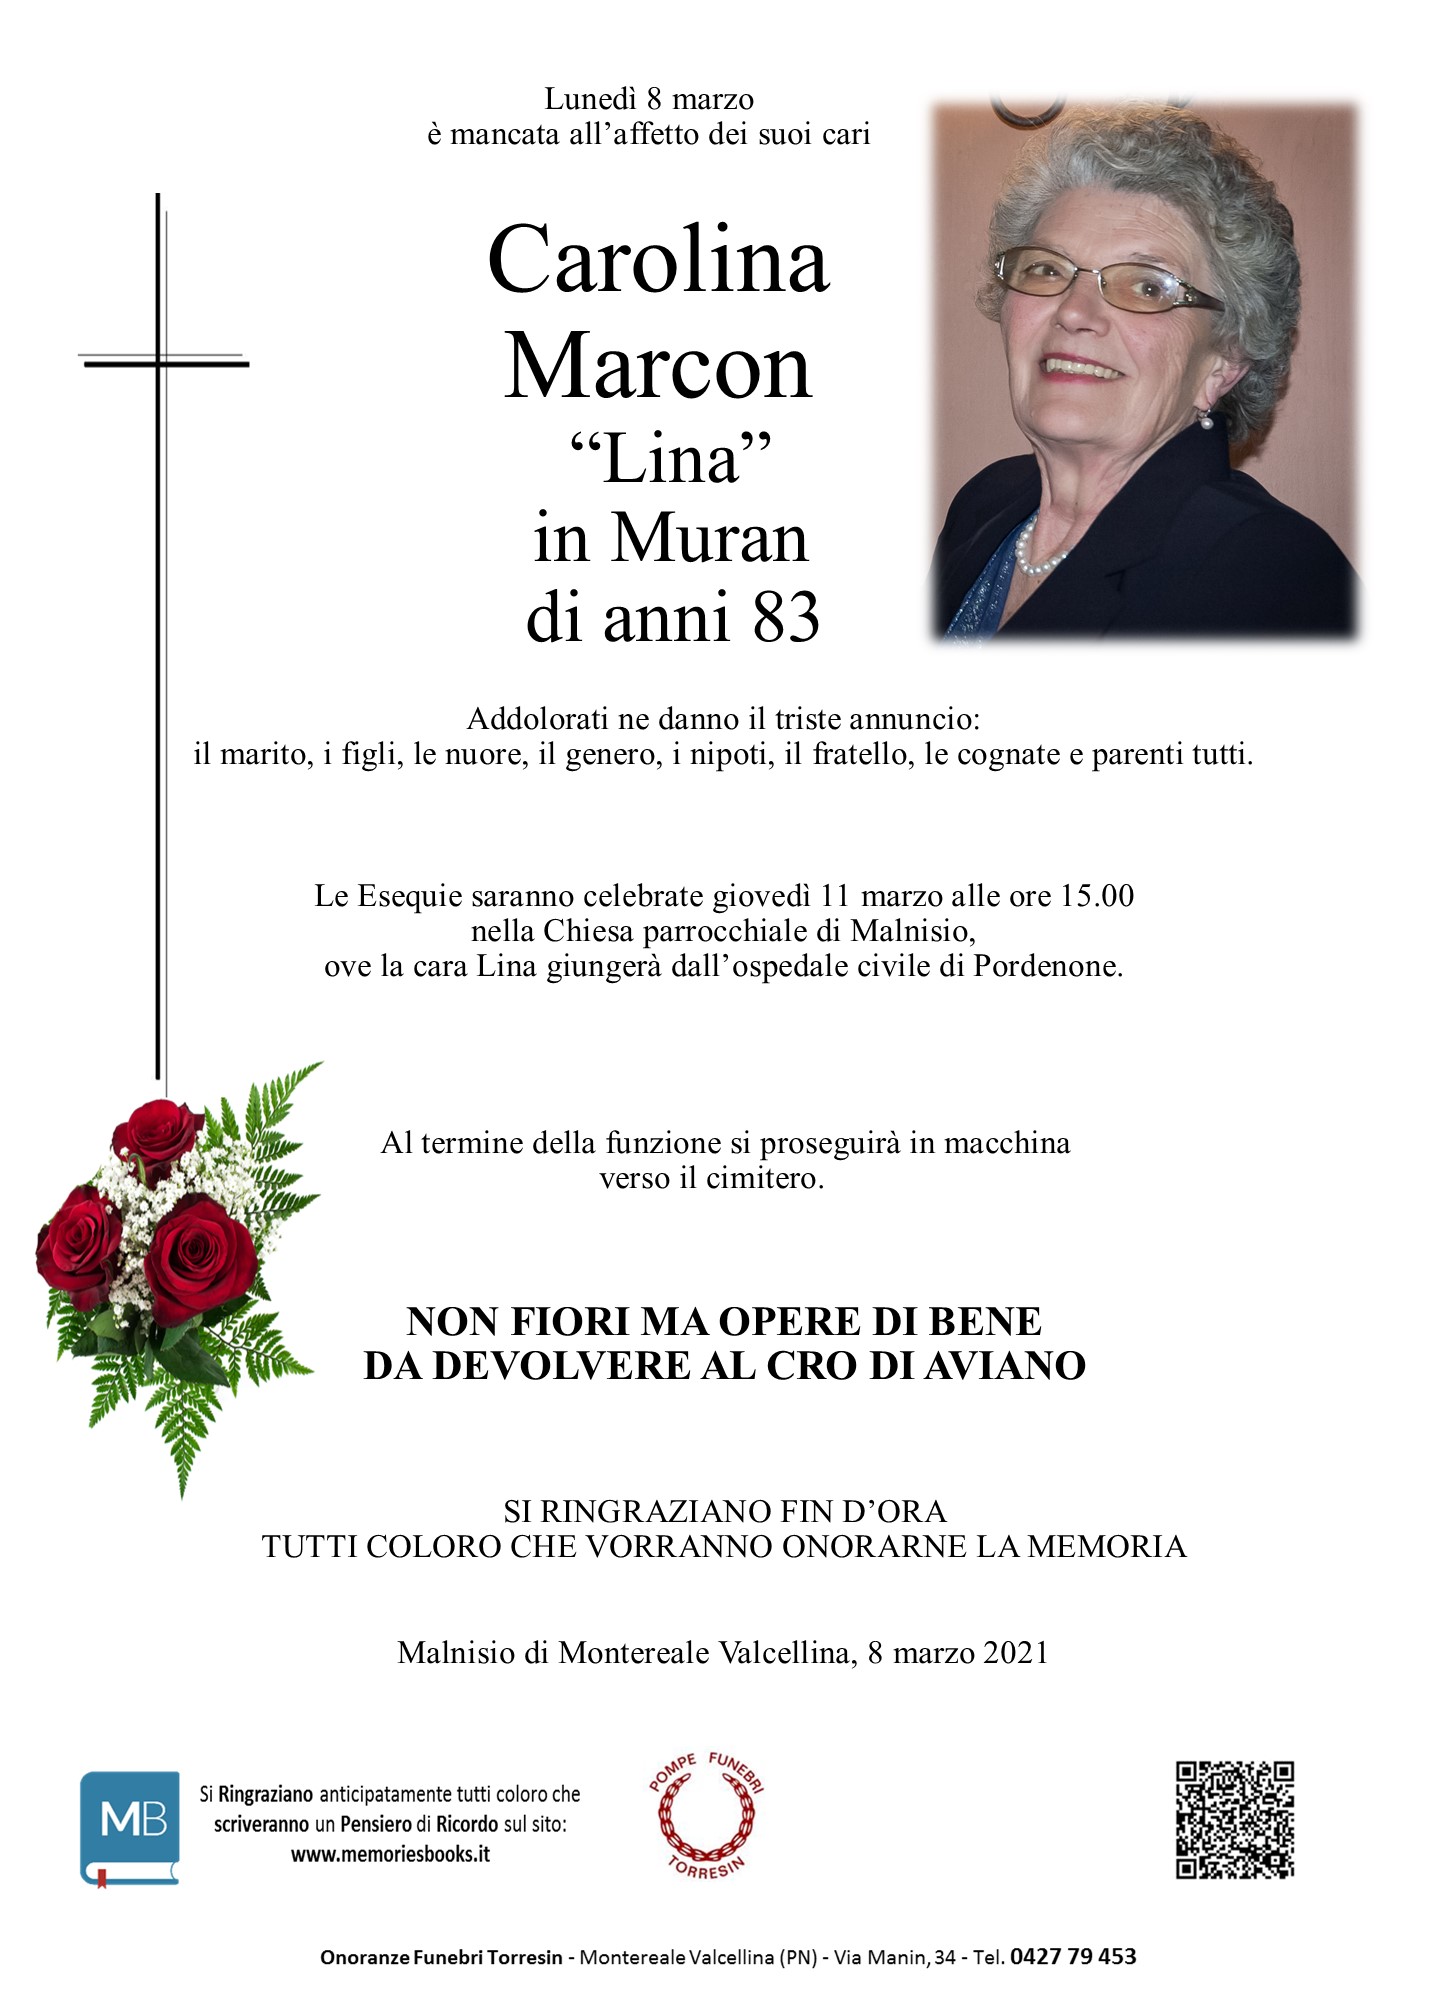 Necrologio Carolina Angelina Marcon In Muran | MemoriesBooks.it